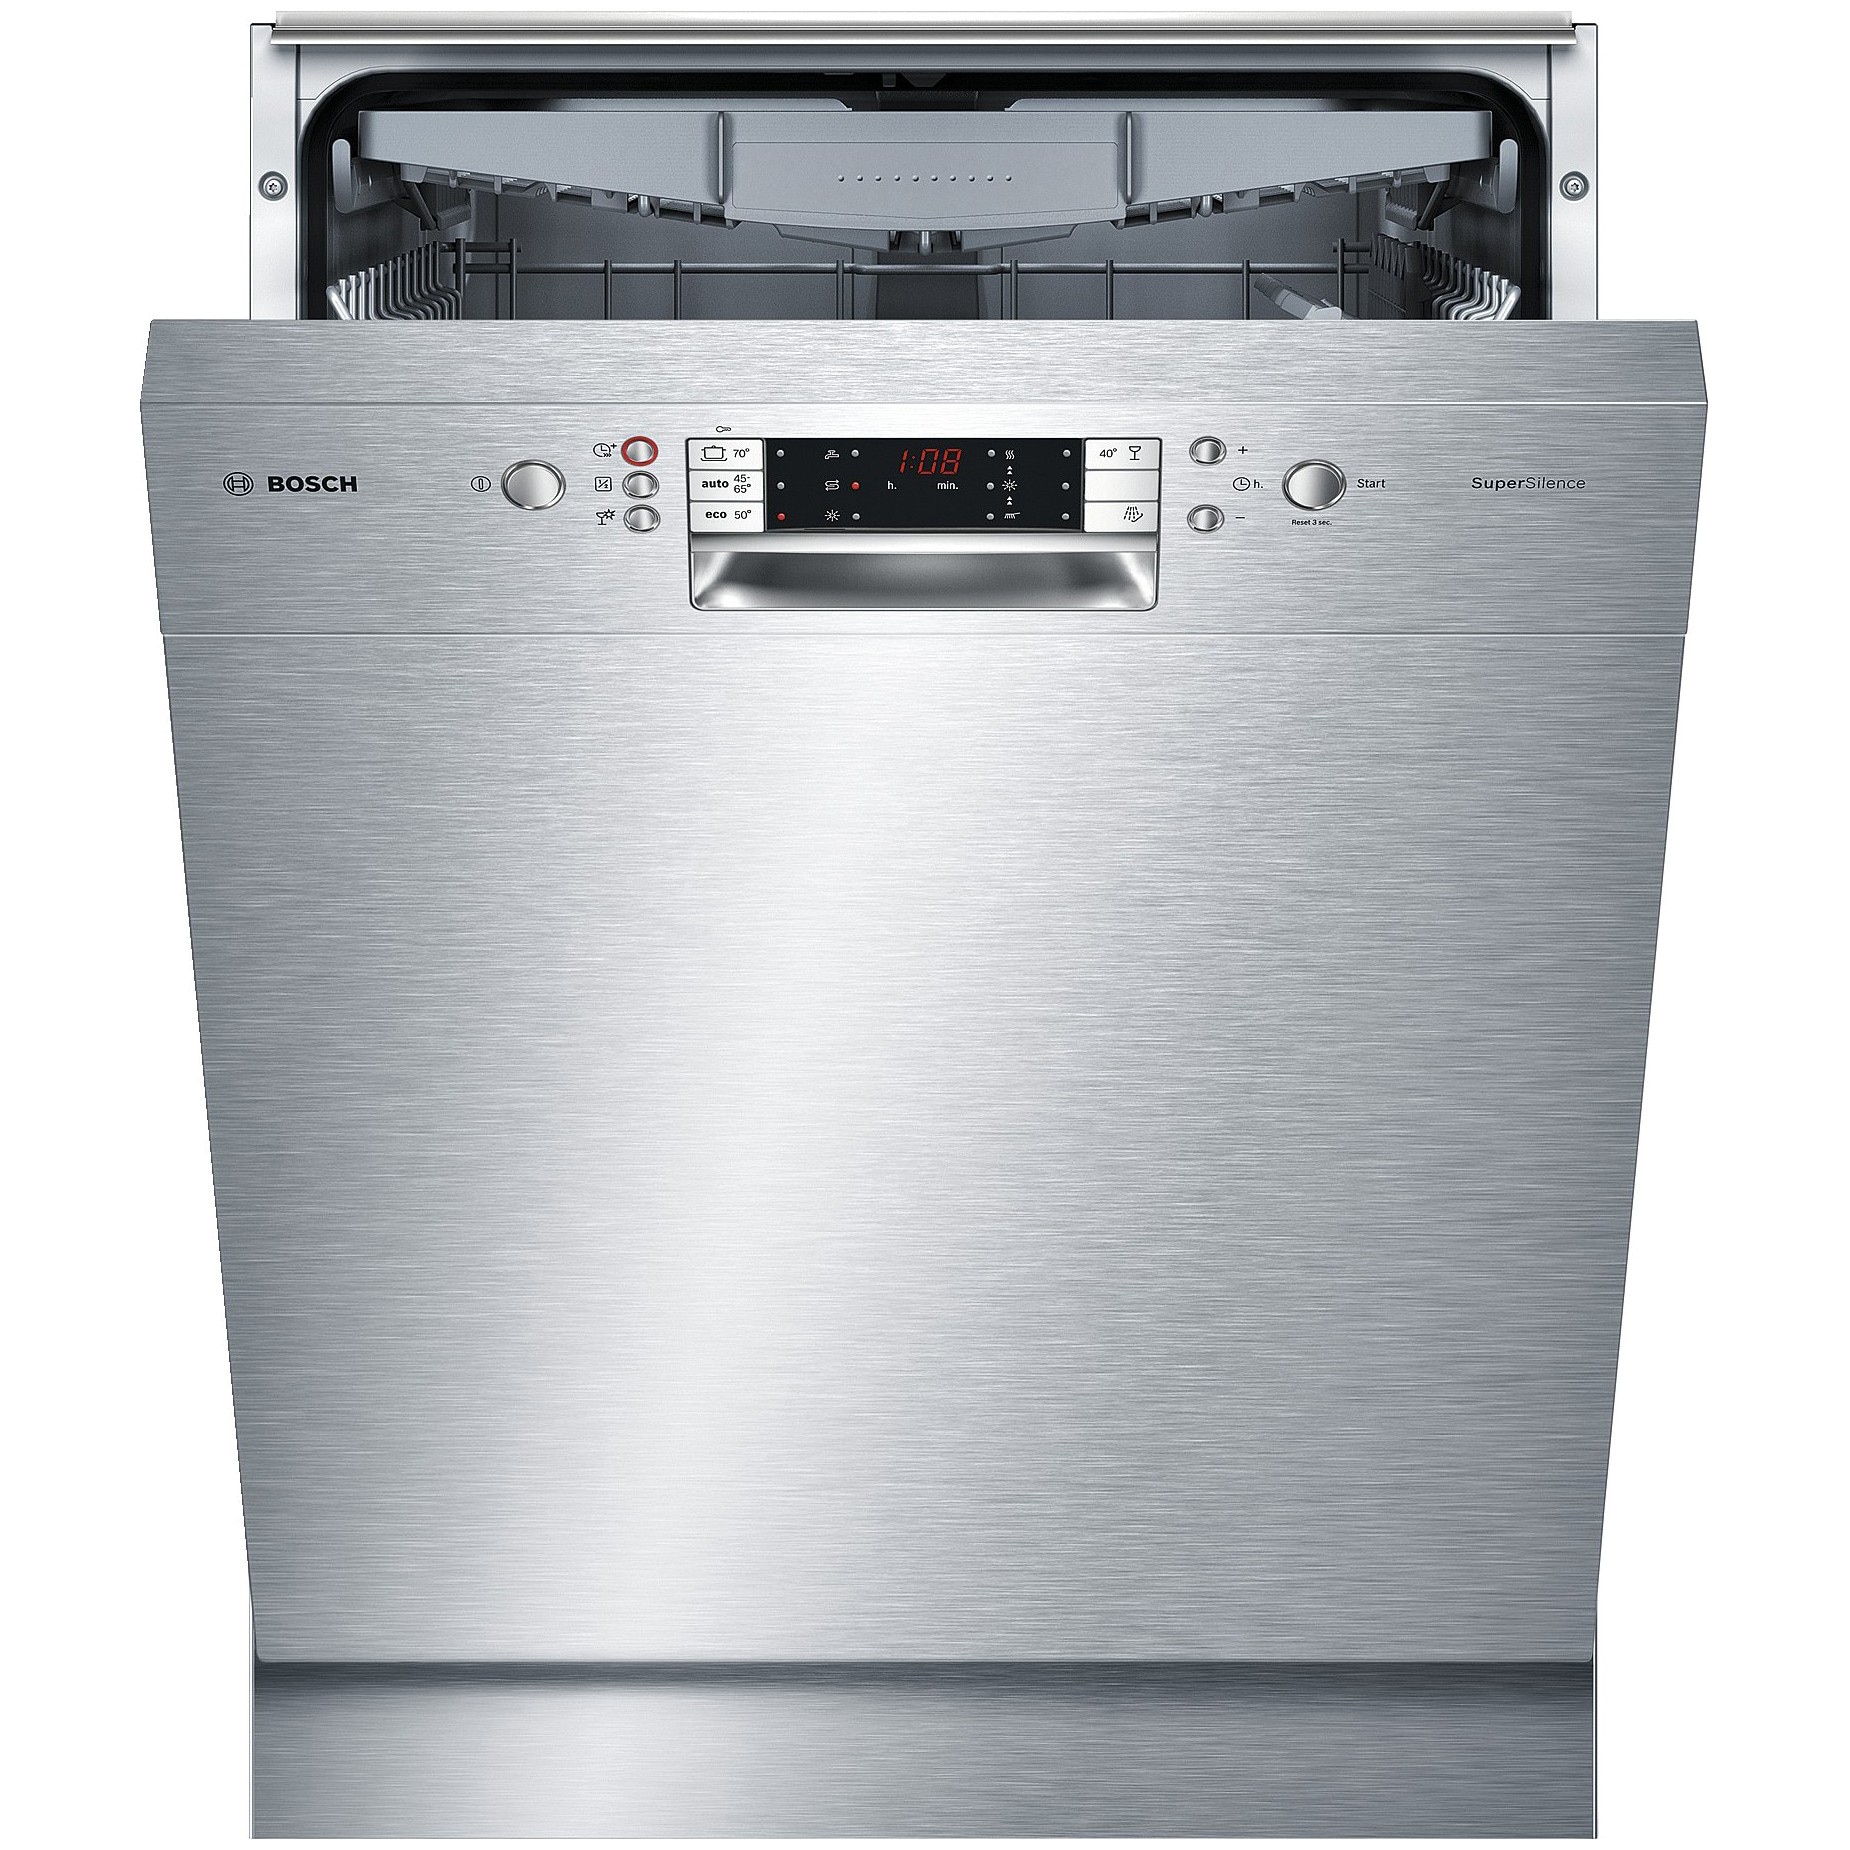 Bosch SuperSilence opvaskemaskine | Elgiganten